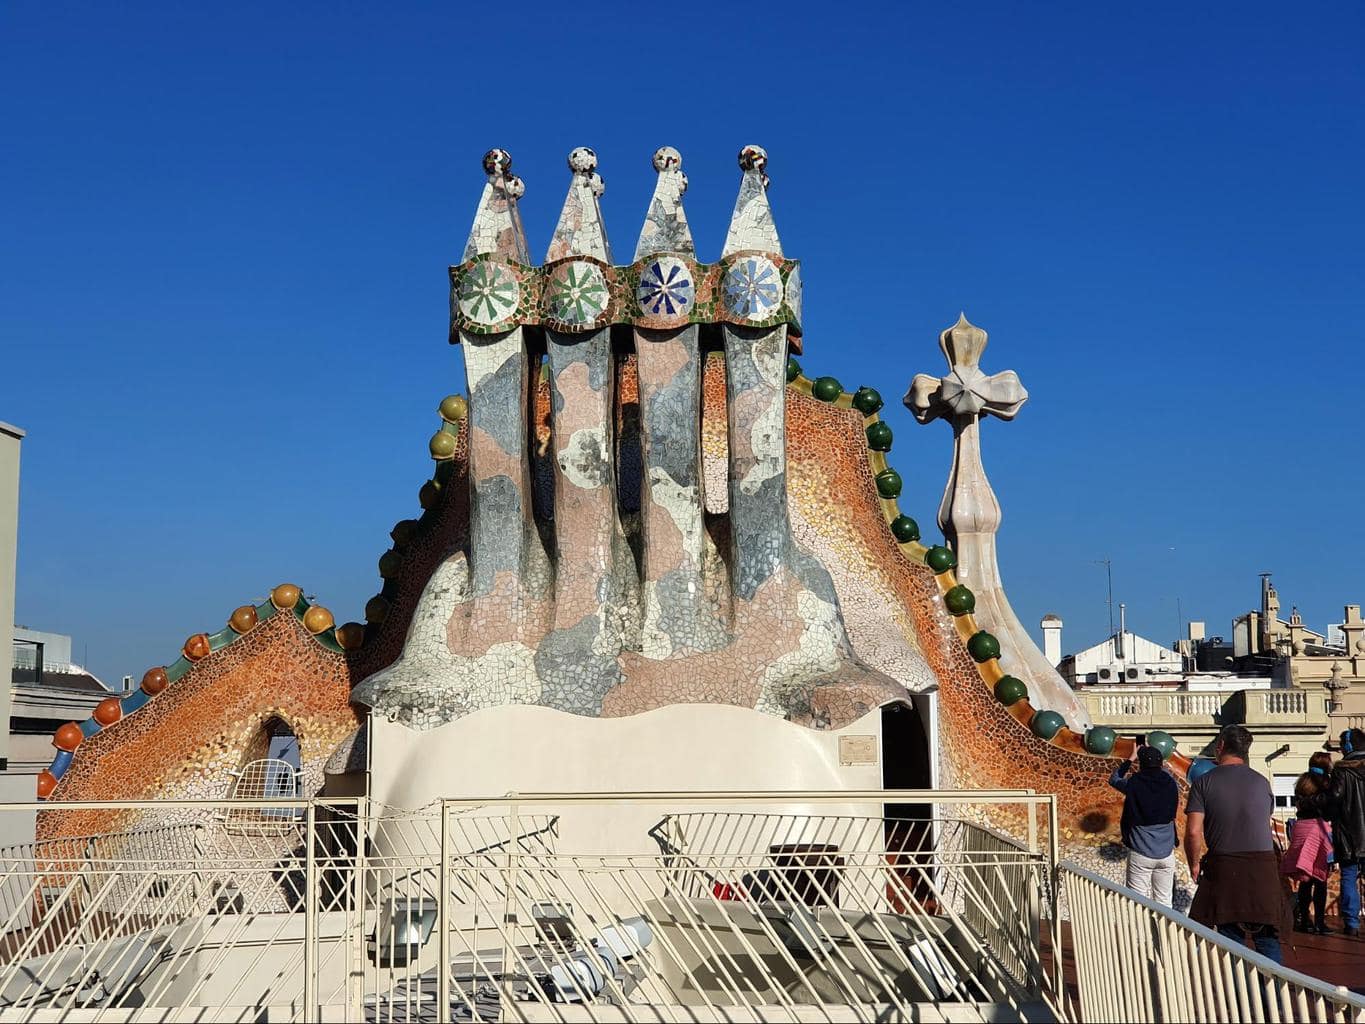 Gaudi’s famous chimneys on the roof of Casa Batlló